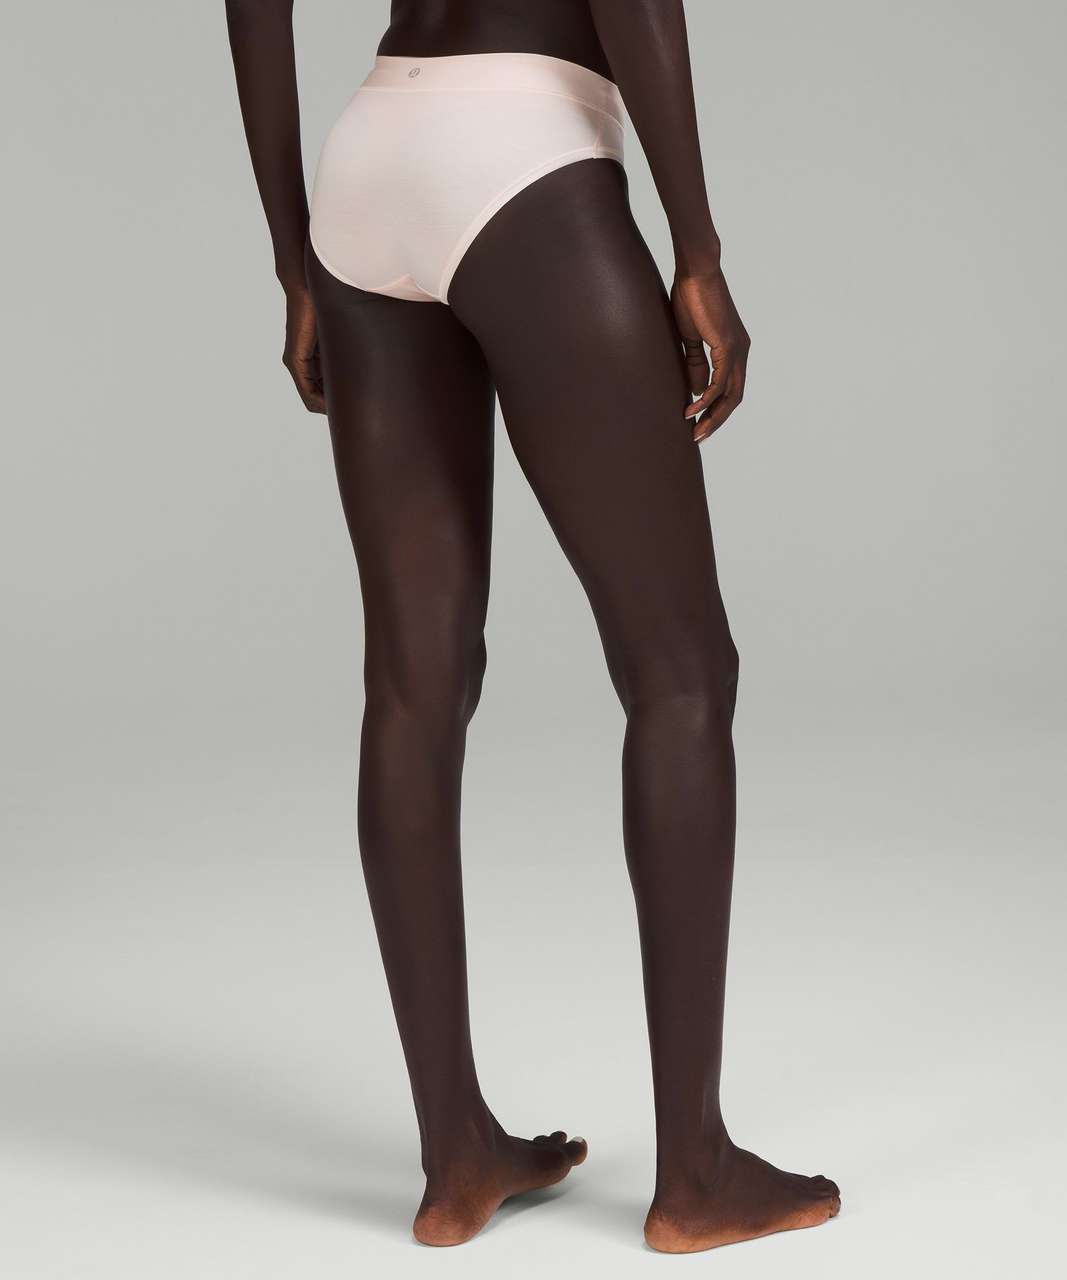 Lululemon UnderEase Mid-Rise Bikini Underwear 3 Pack - Double Dimension Starlight Black / Butter Pink / Black